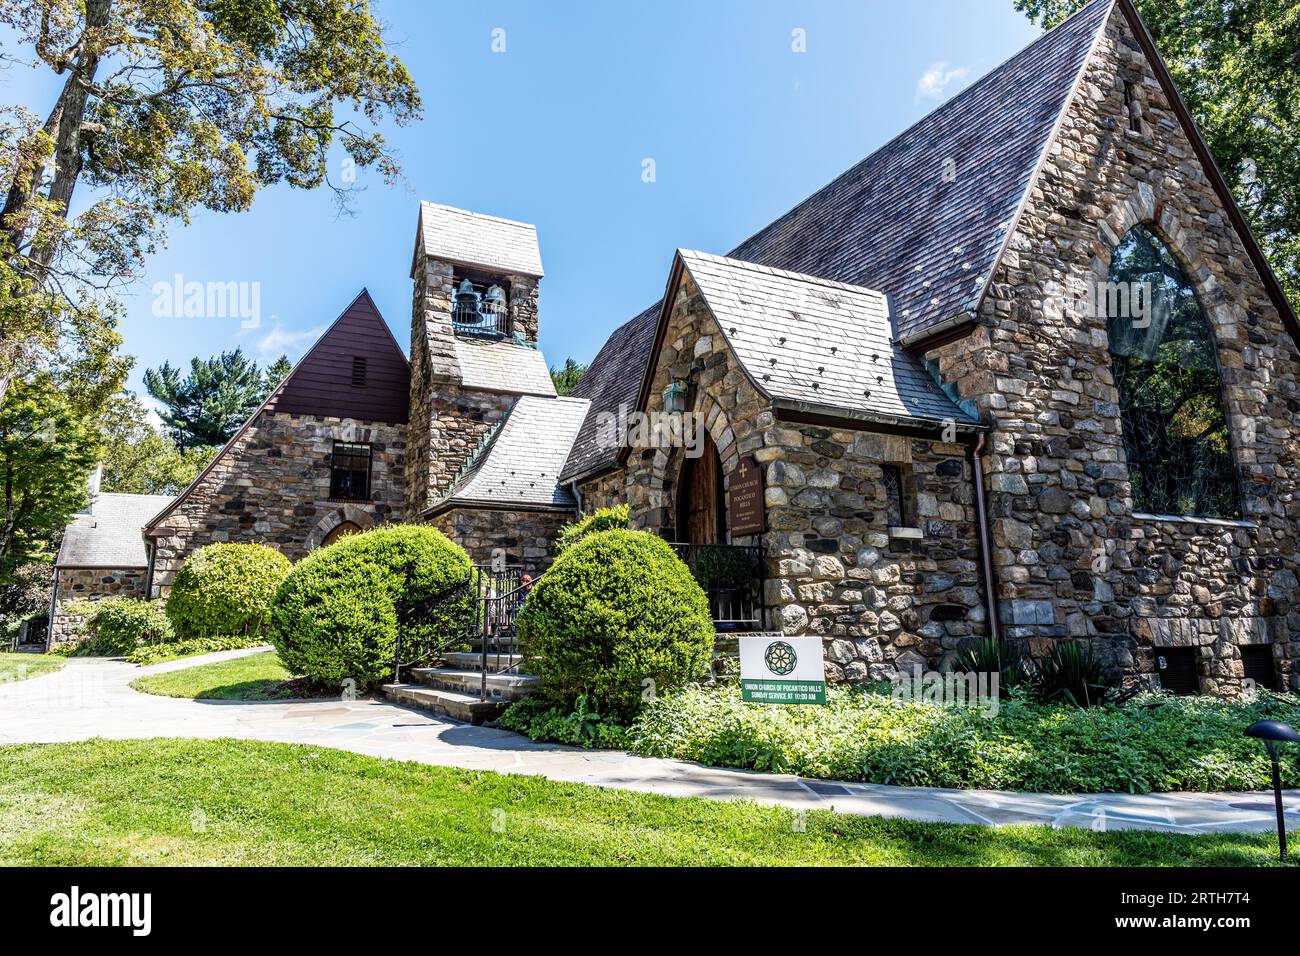 The Union Church of Pocantico Hills New York State USA Stock Photo